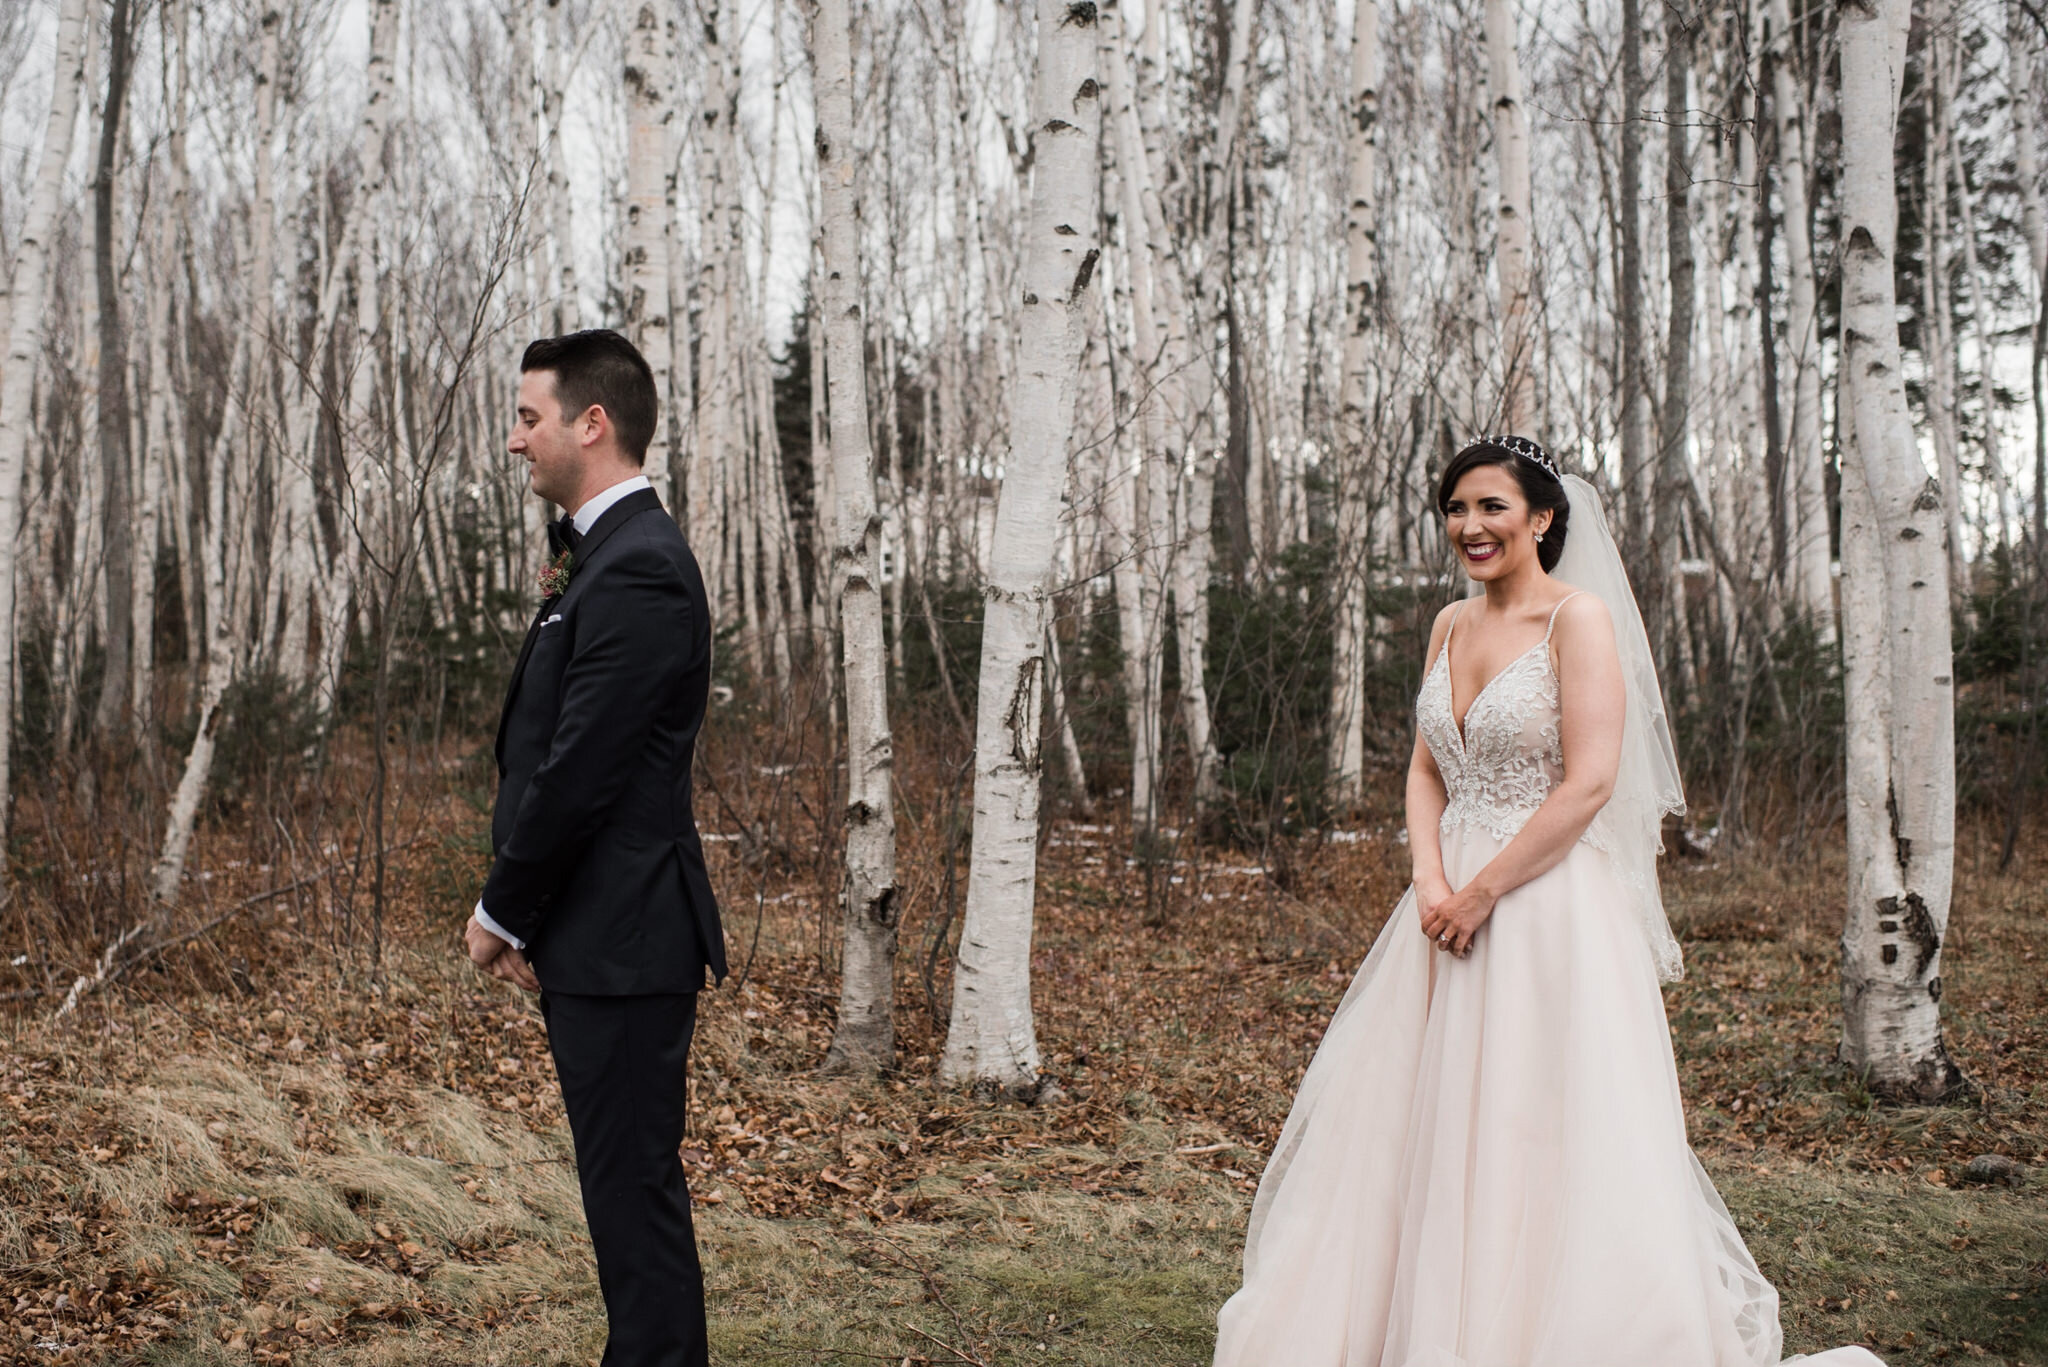 322-first-look-bride-groom-winter-birch-trees-wedding-photographer-toronto-ontario.jpg